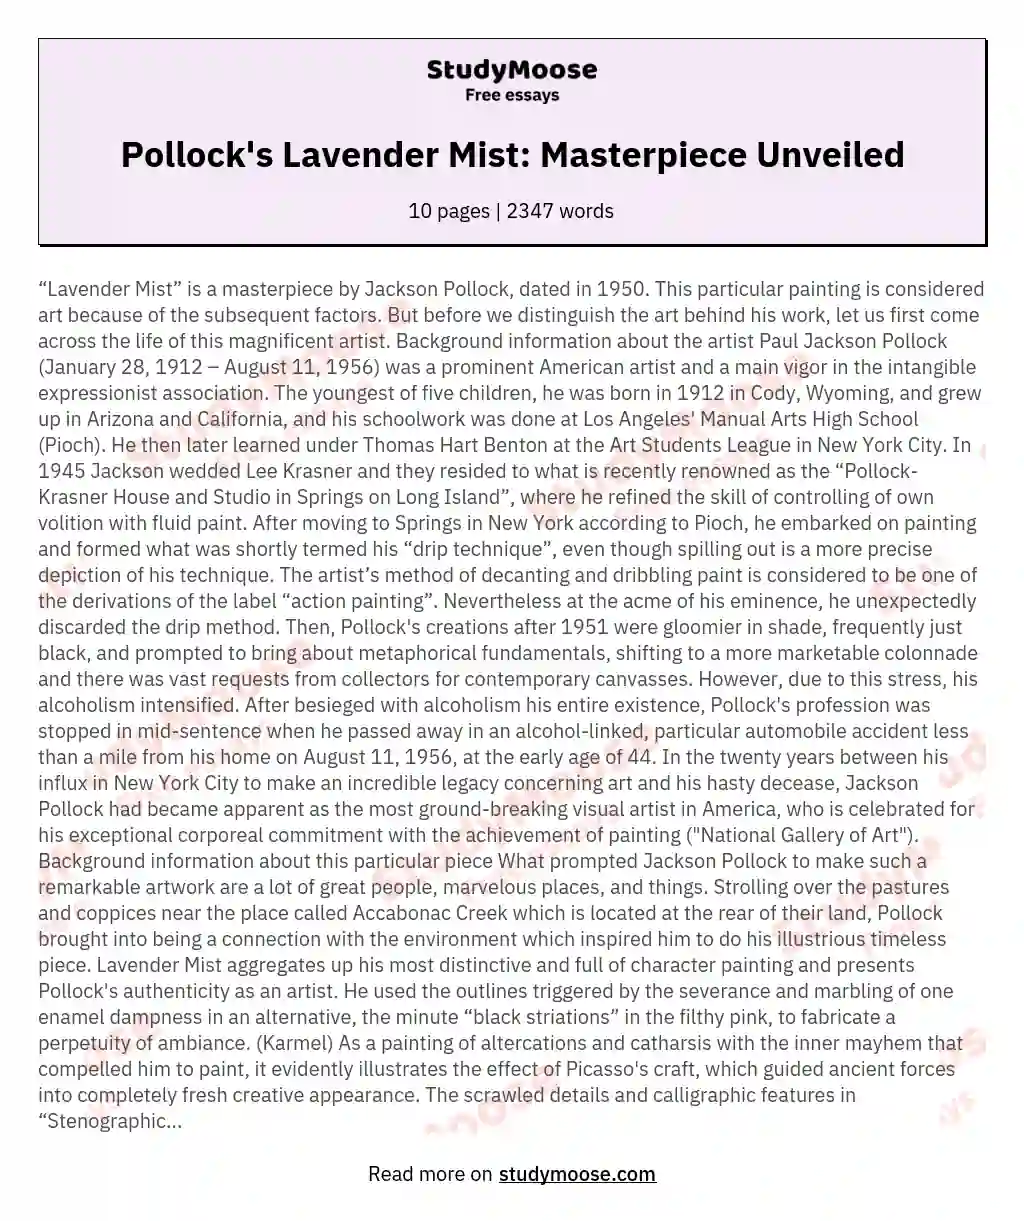 Pollock's Lavender Mist: Masterpiece Unveiled essay